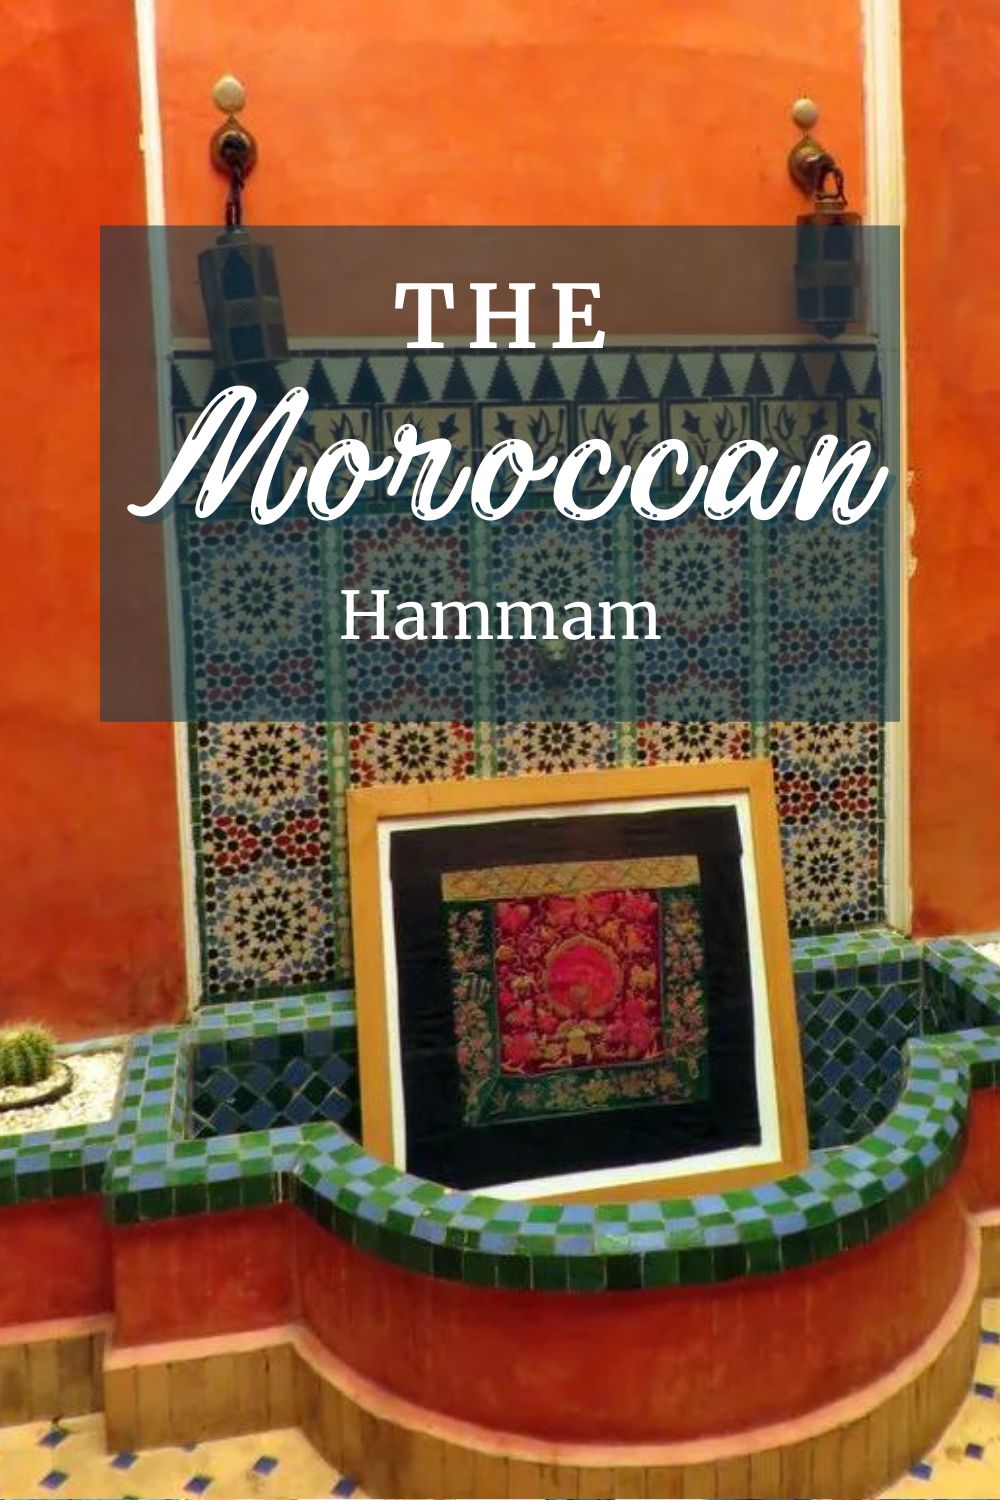 Experiencing The Moroccan Hammam